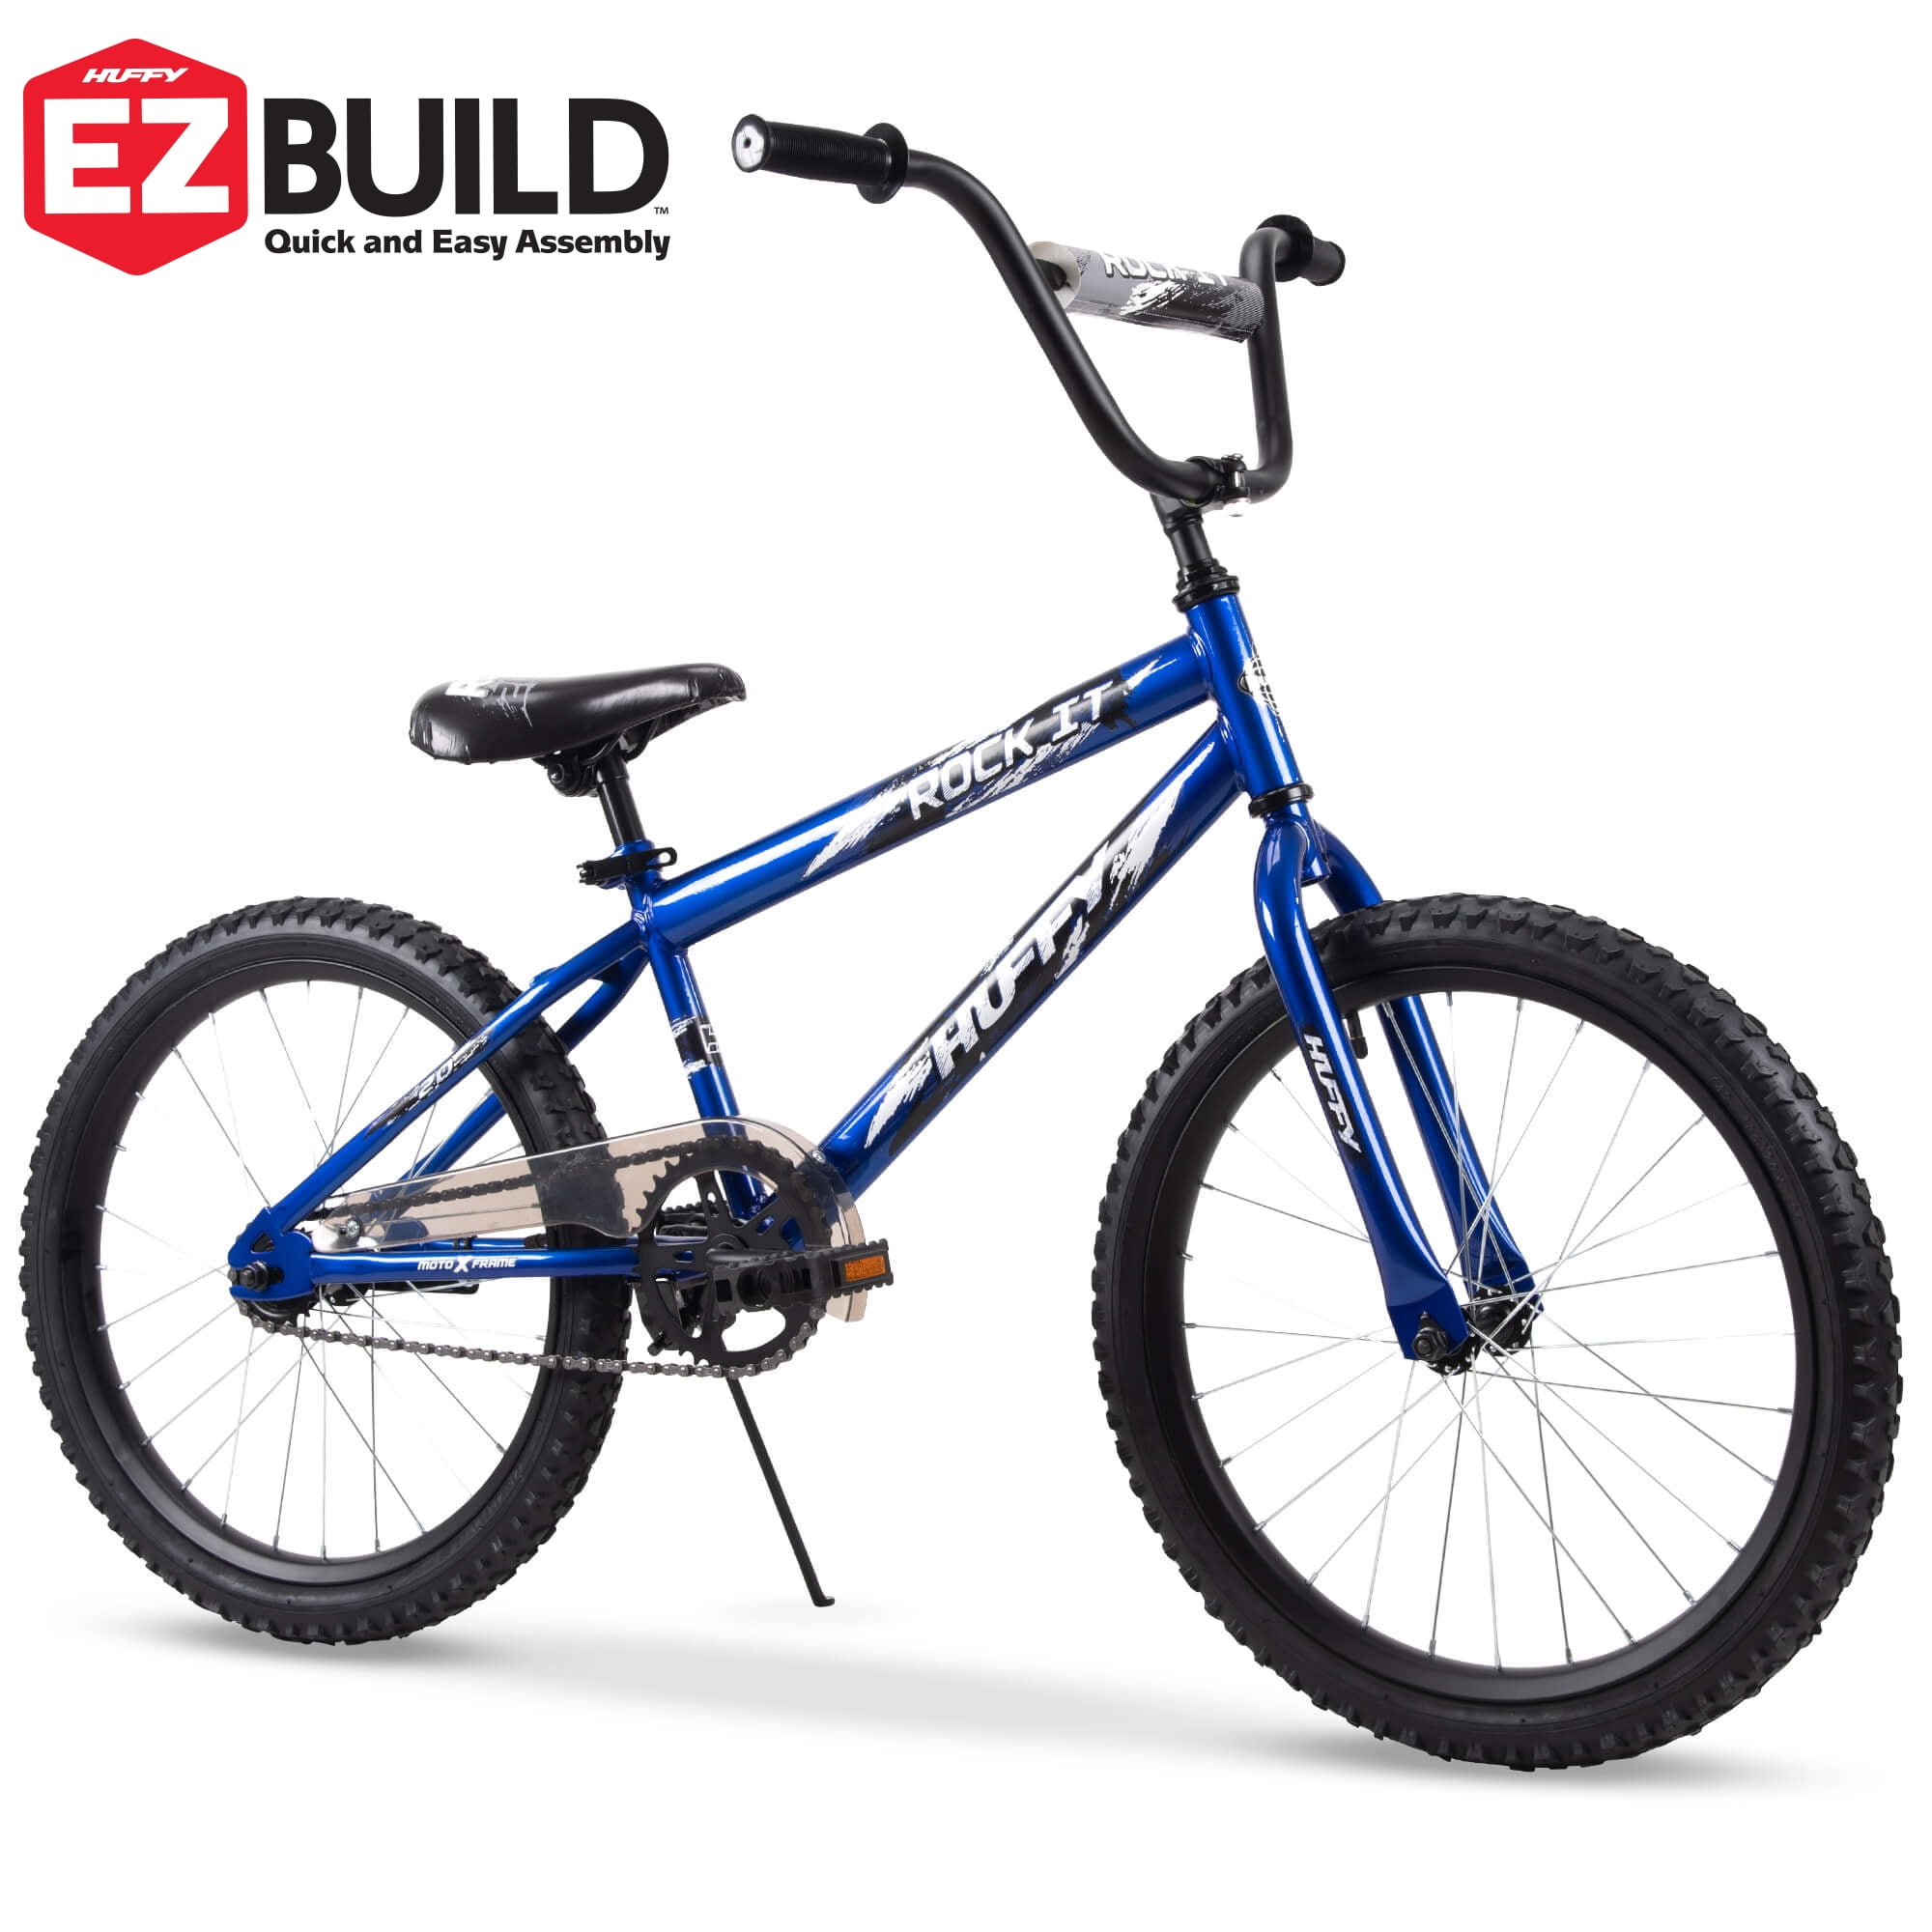 Blue for sale online Huffy 50509 20 inch Bike 